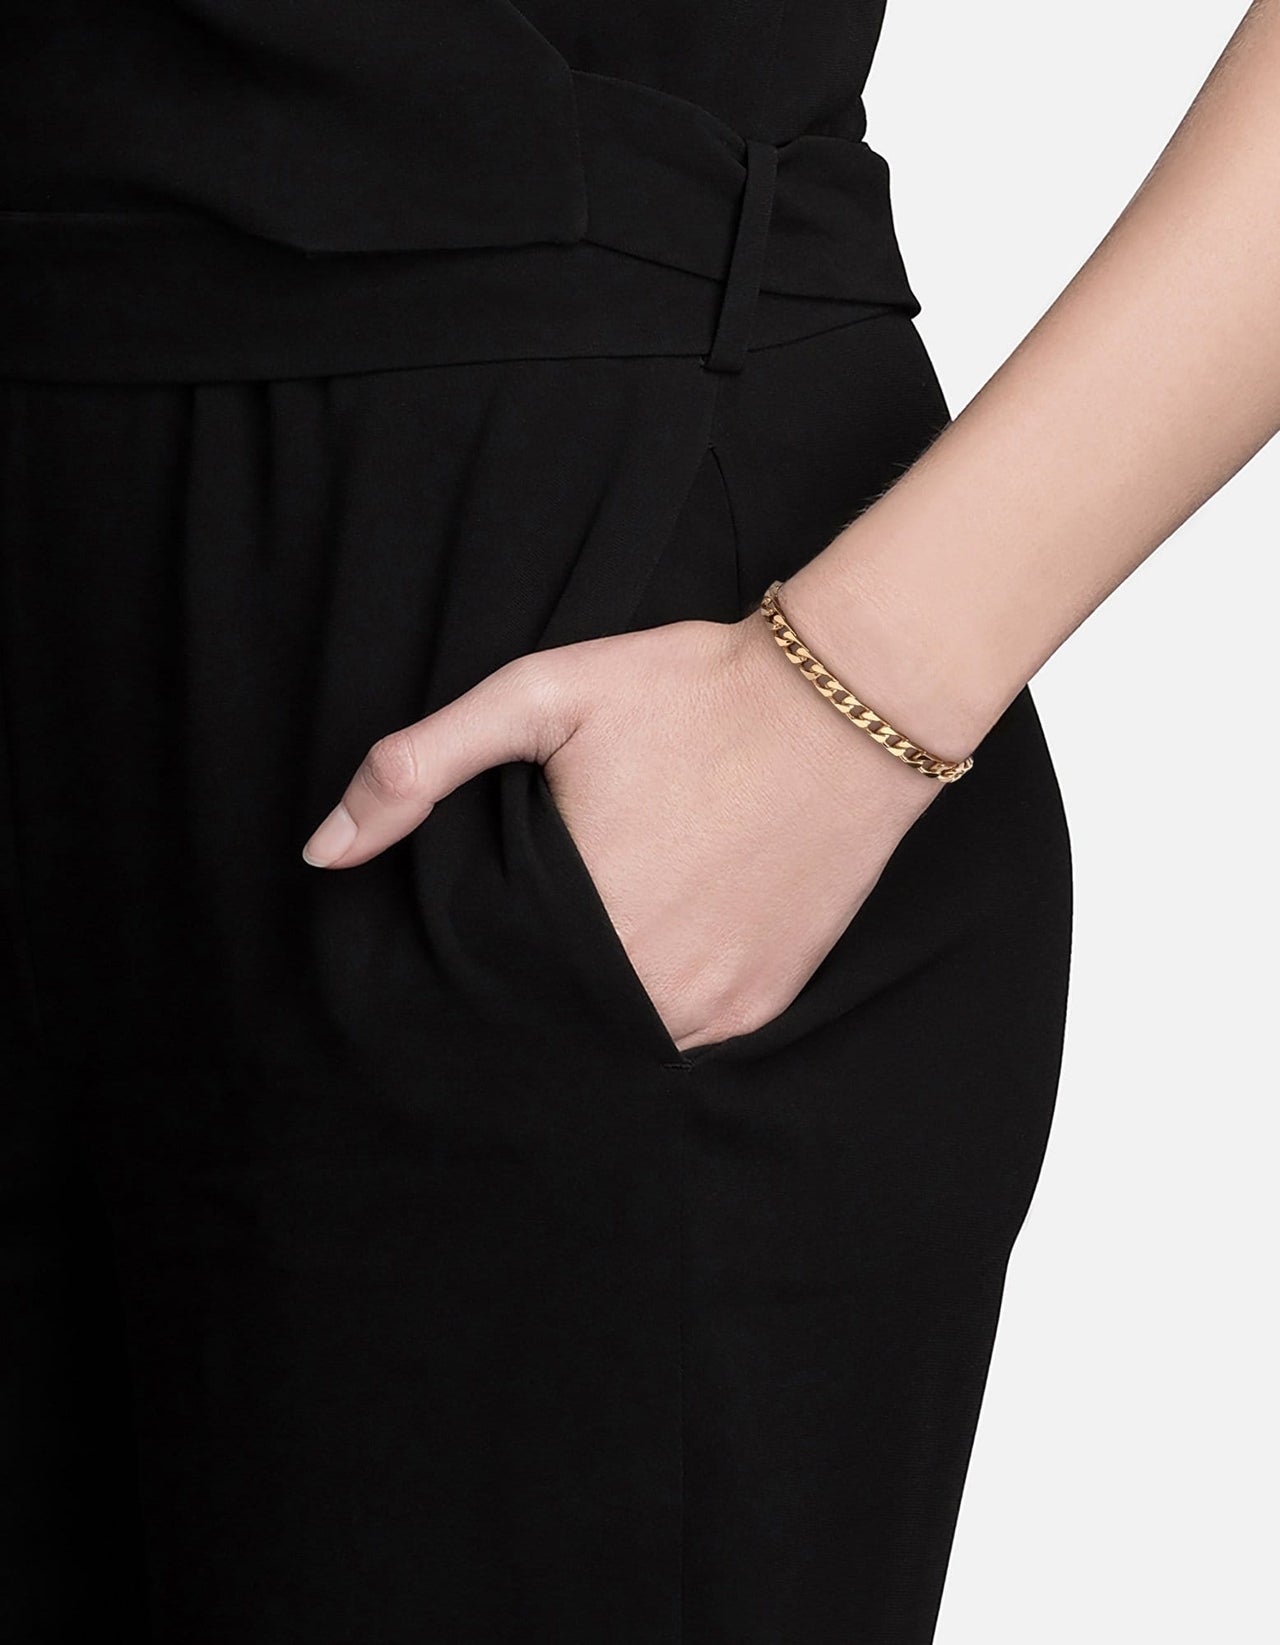 wholesale metal wrist sizer bracelet bangle